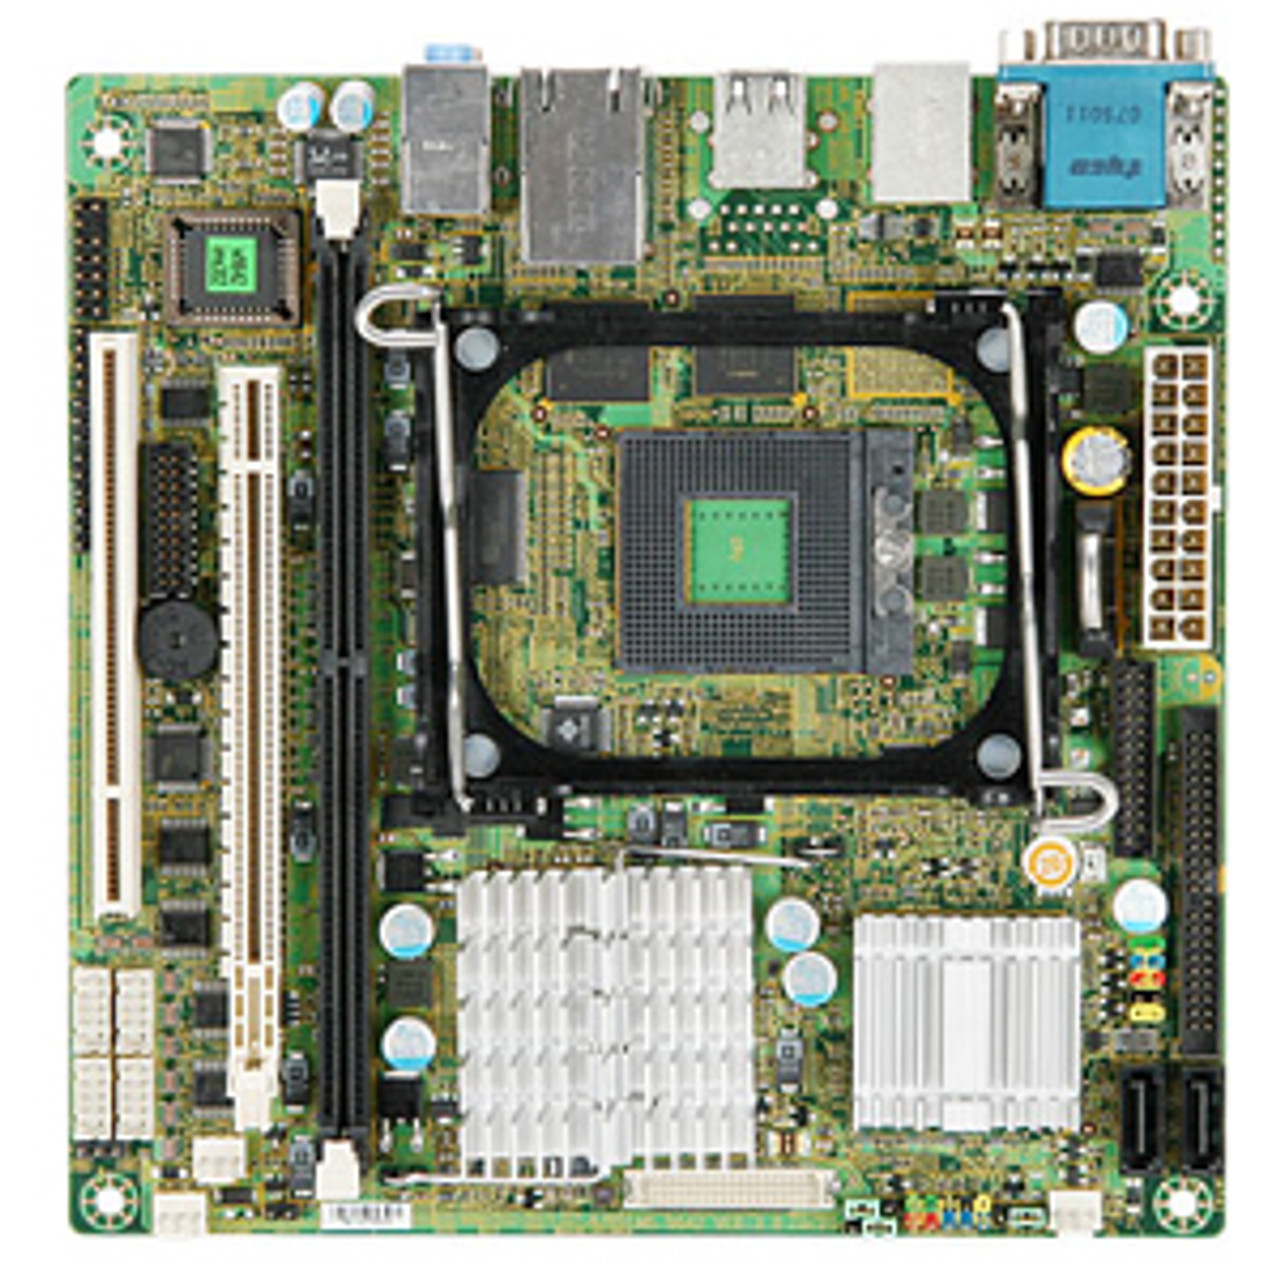 9642-080 MSI Intel Socket M Core2duocoreduocoresolo & Celeron M (Refurbished)